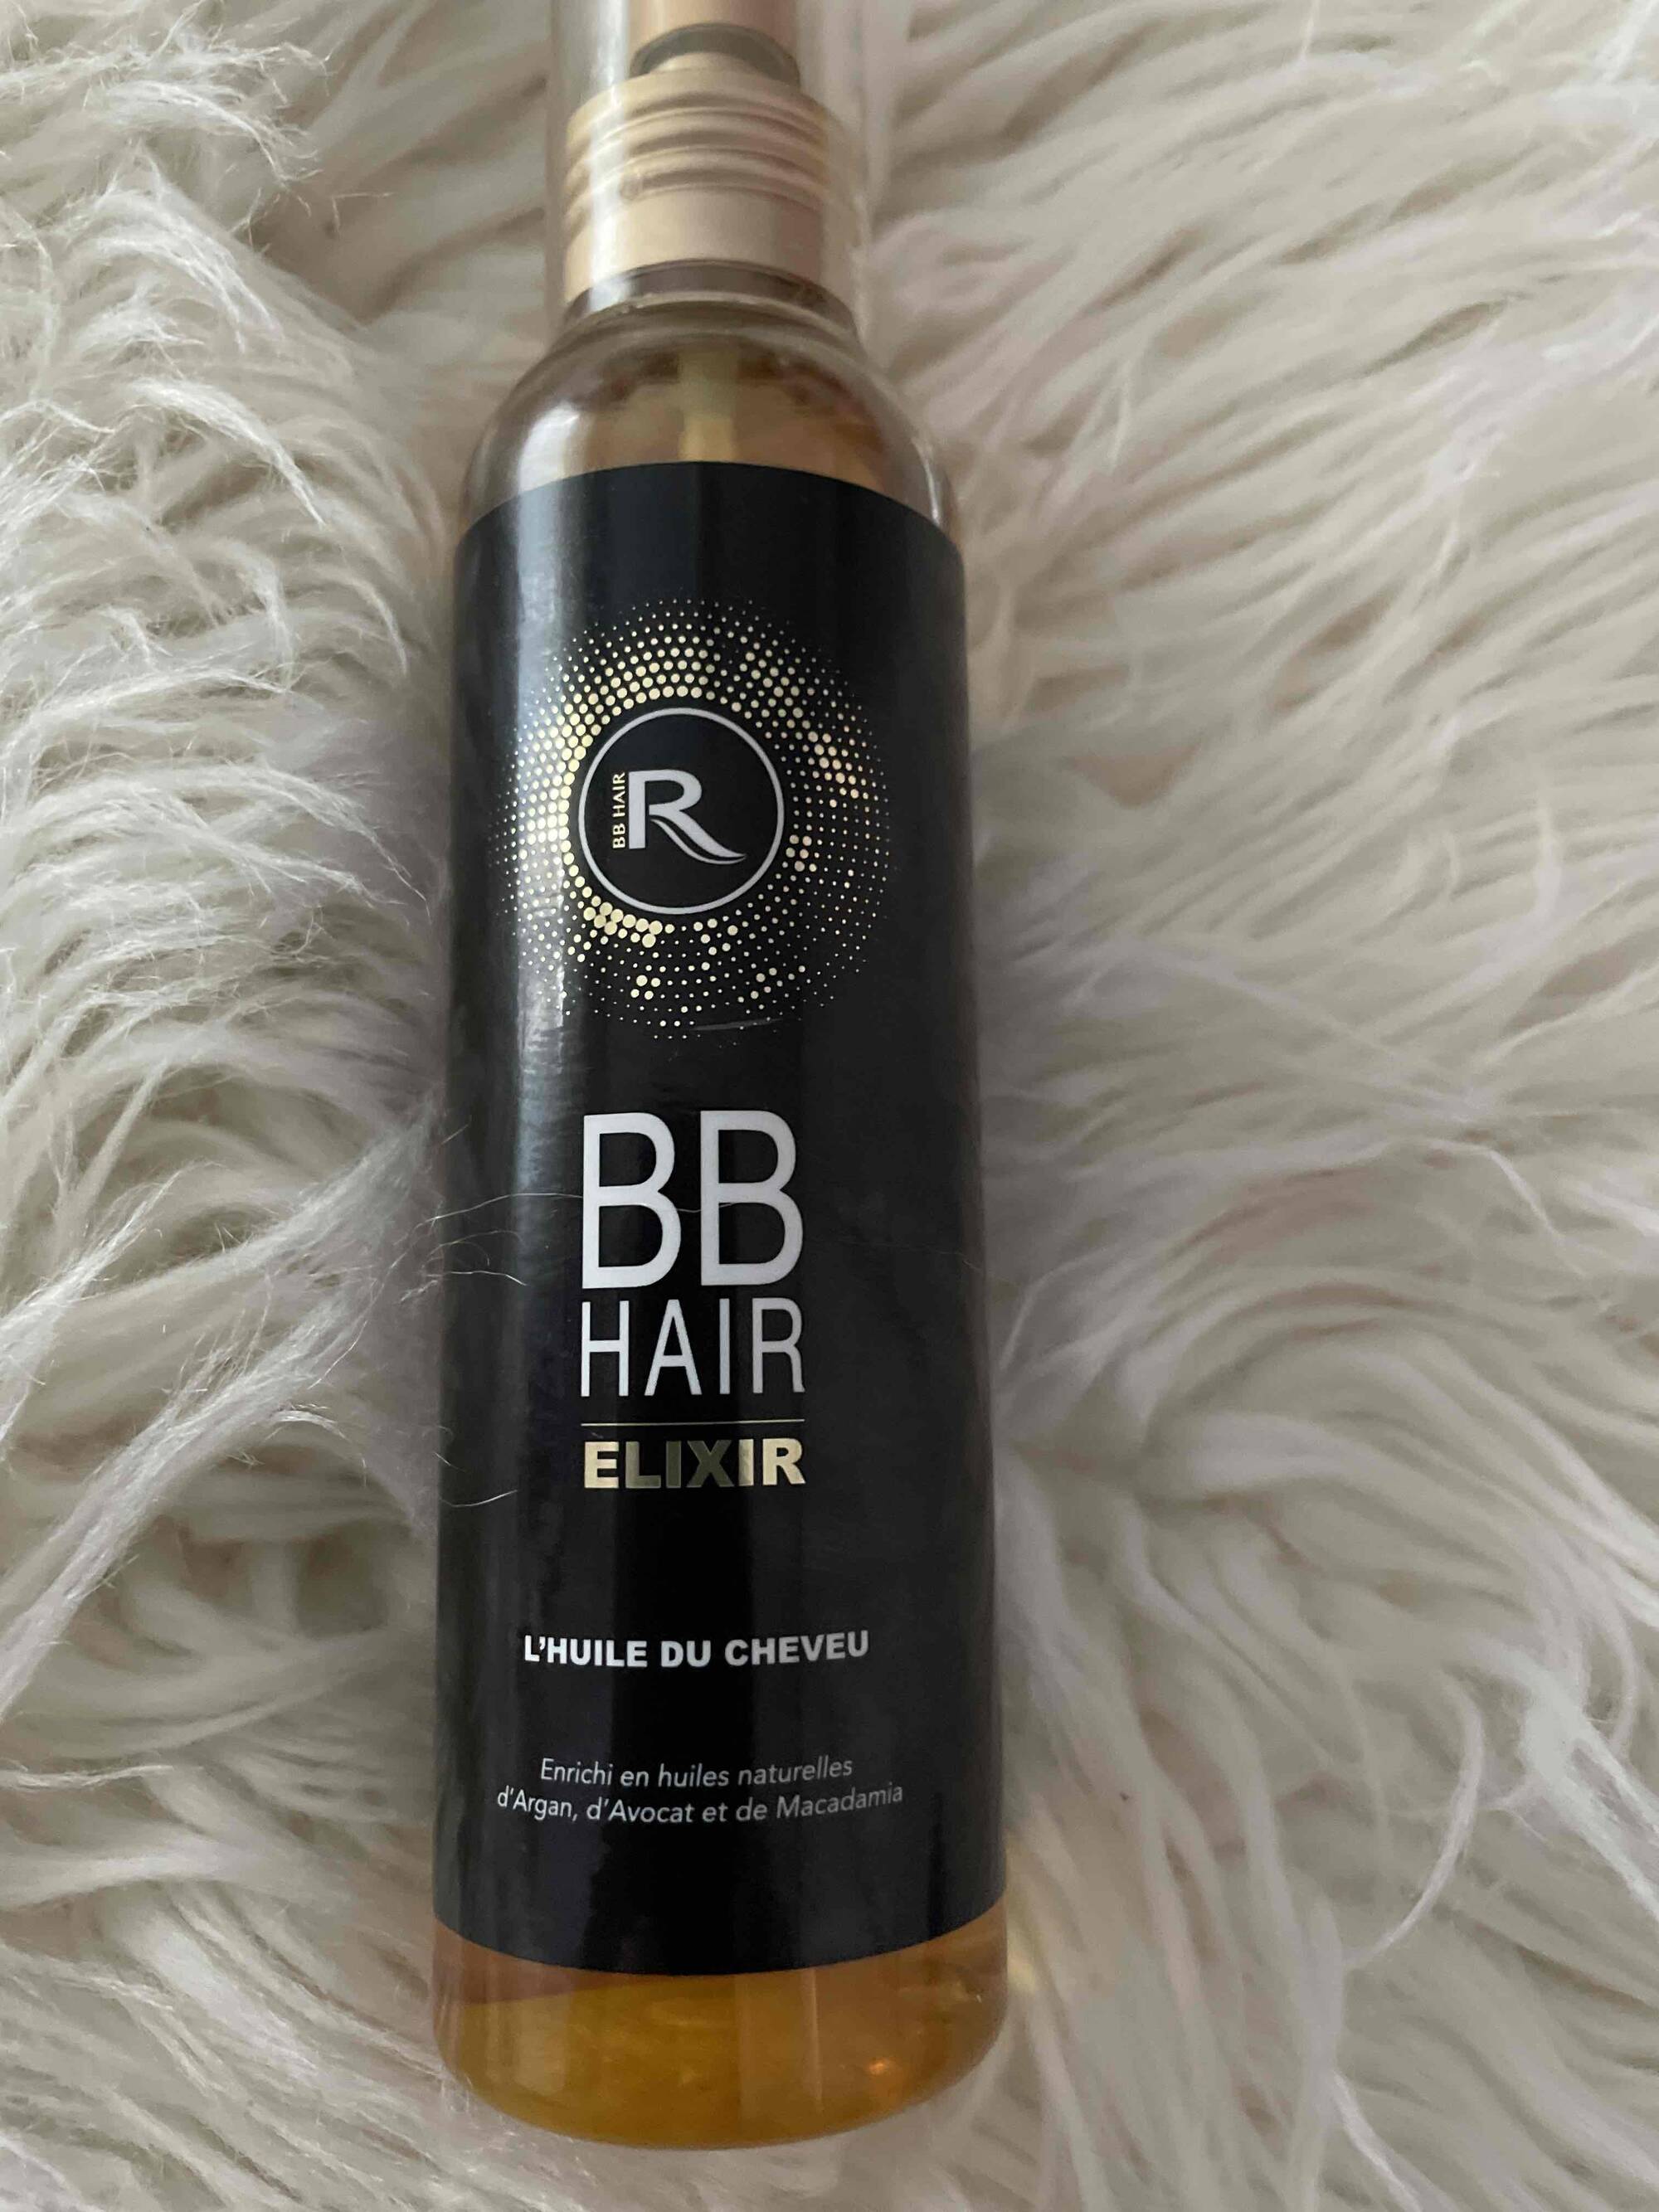 GENERIK - BB hair elixir - L'huile du cheveu